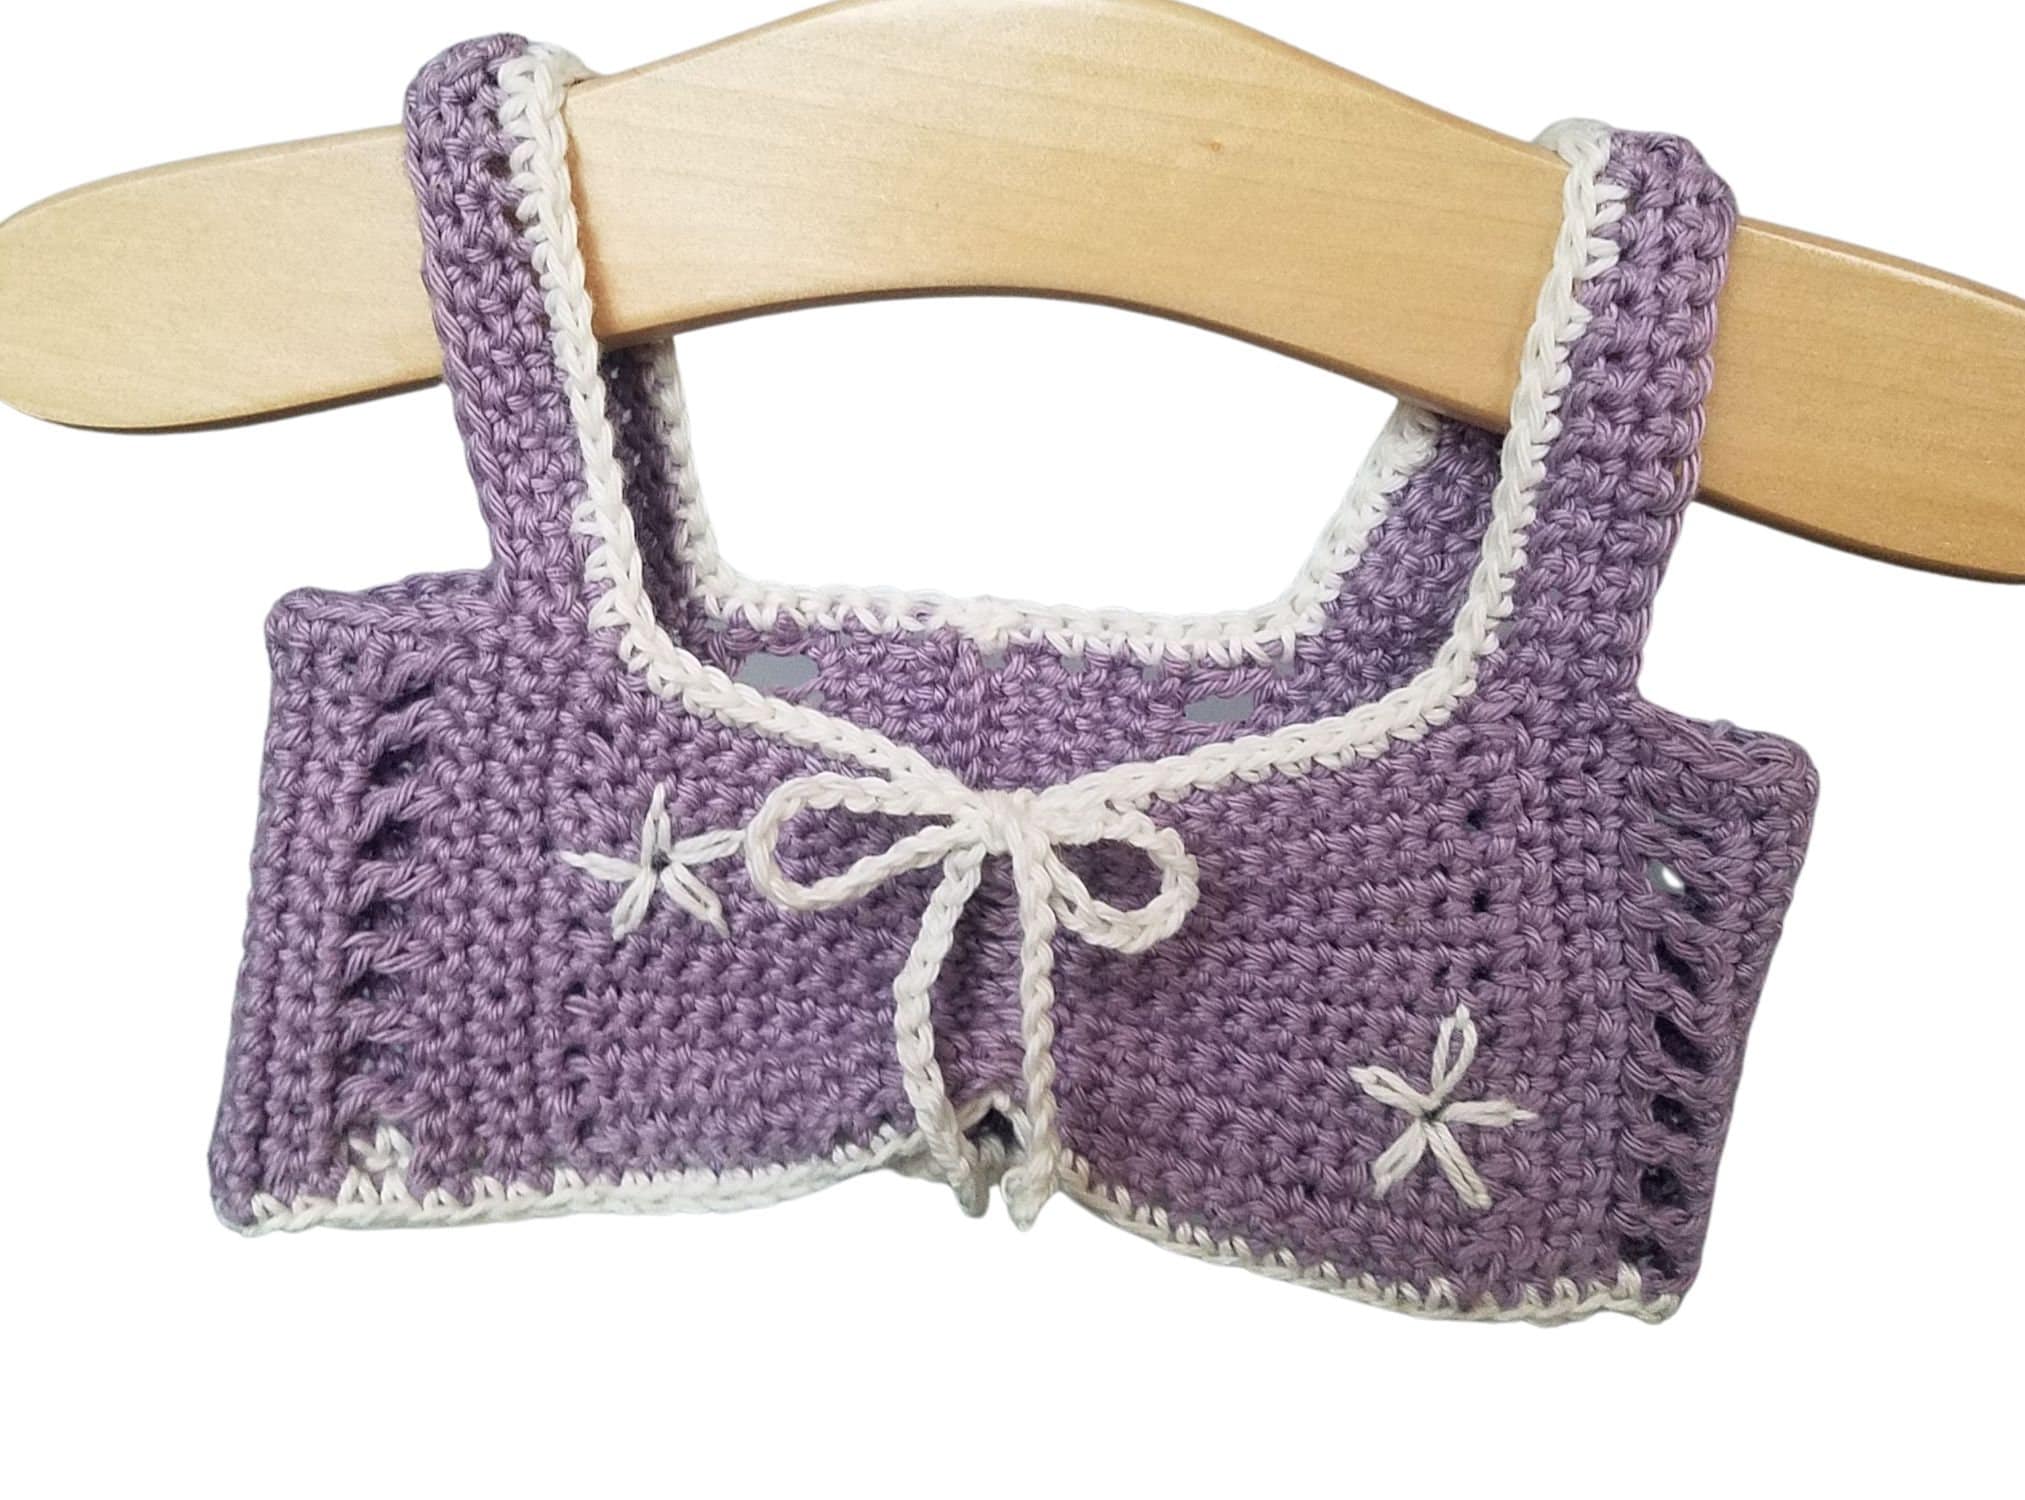 OSD Crochet on X: Water Baby🌊 Top - bra cup sizes : S, M, L, XL - R150  #crochetbralette #crocetbusiness #crochetdesigns #crochet #crochettop  #needlework  / X